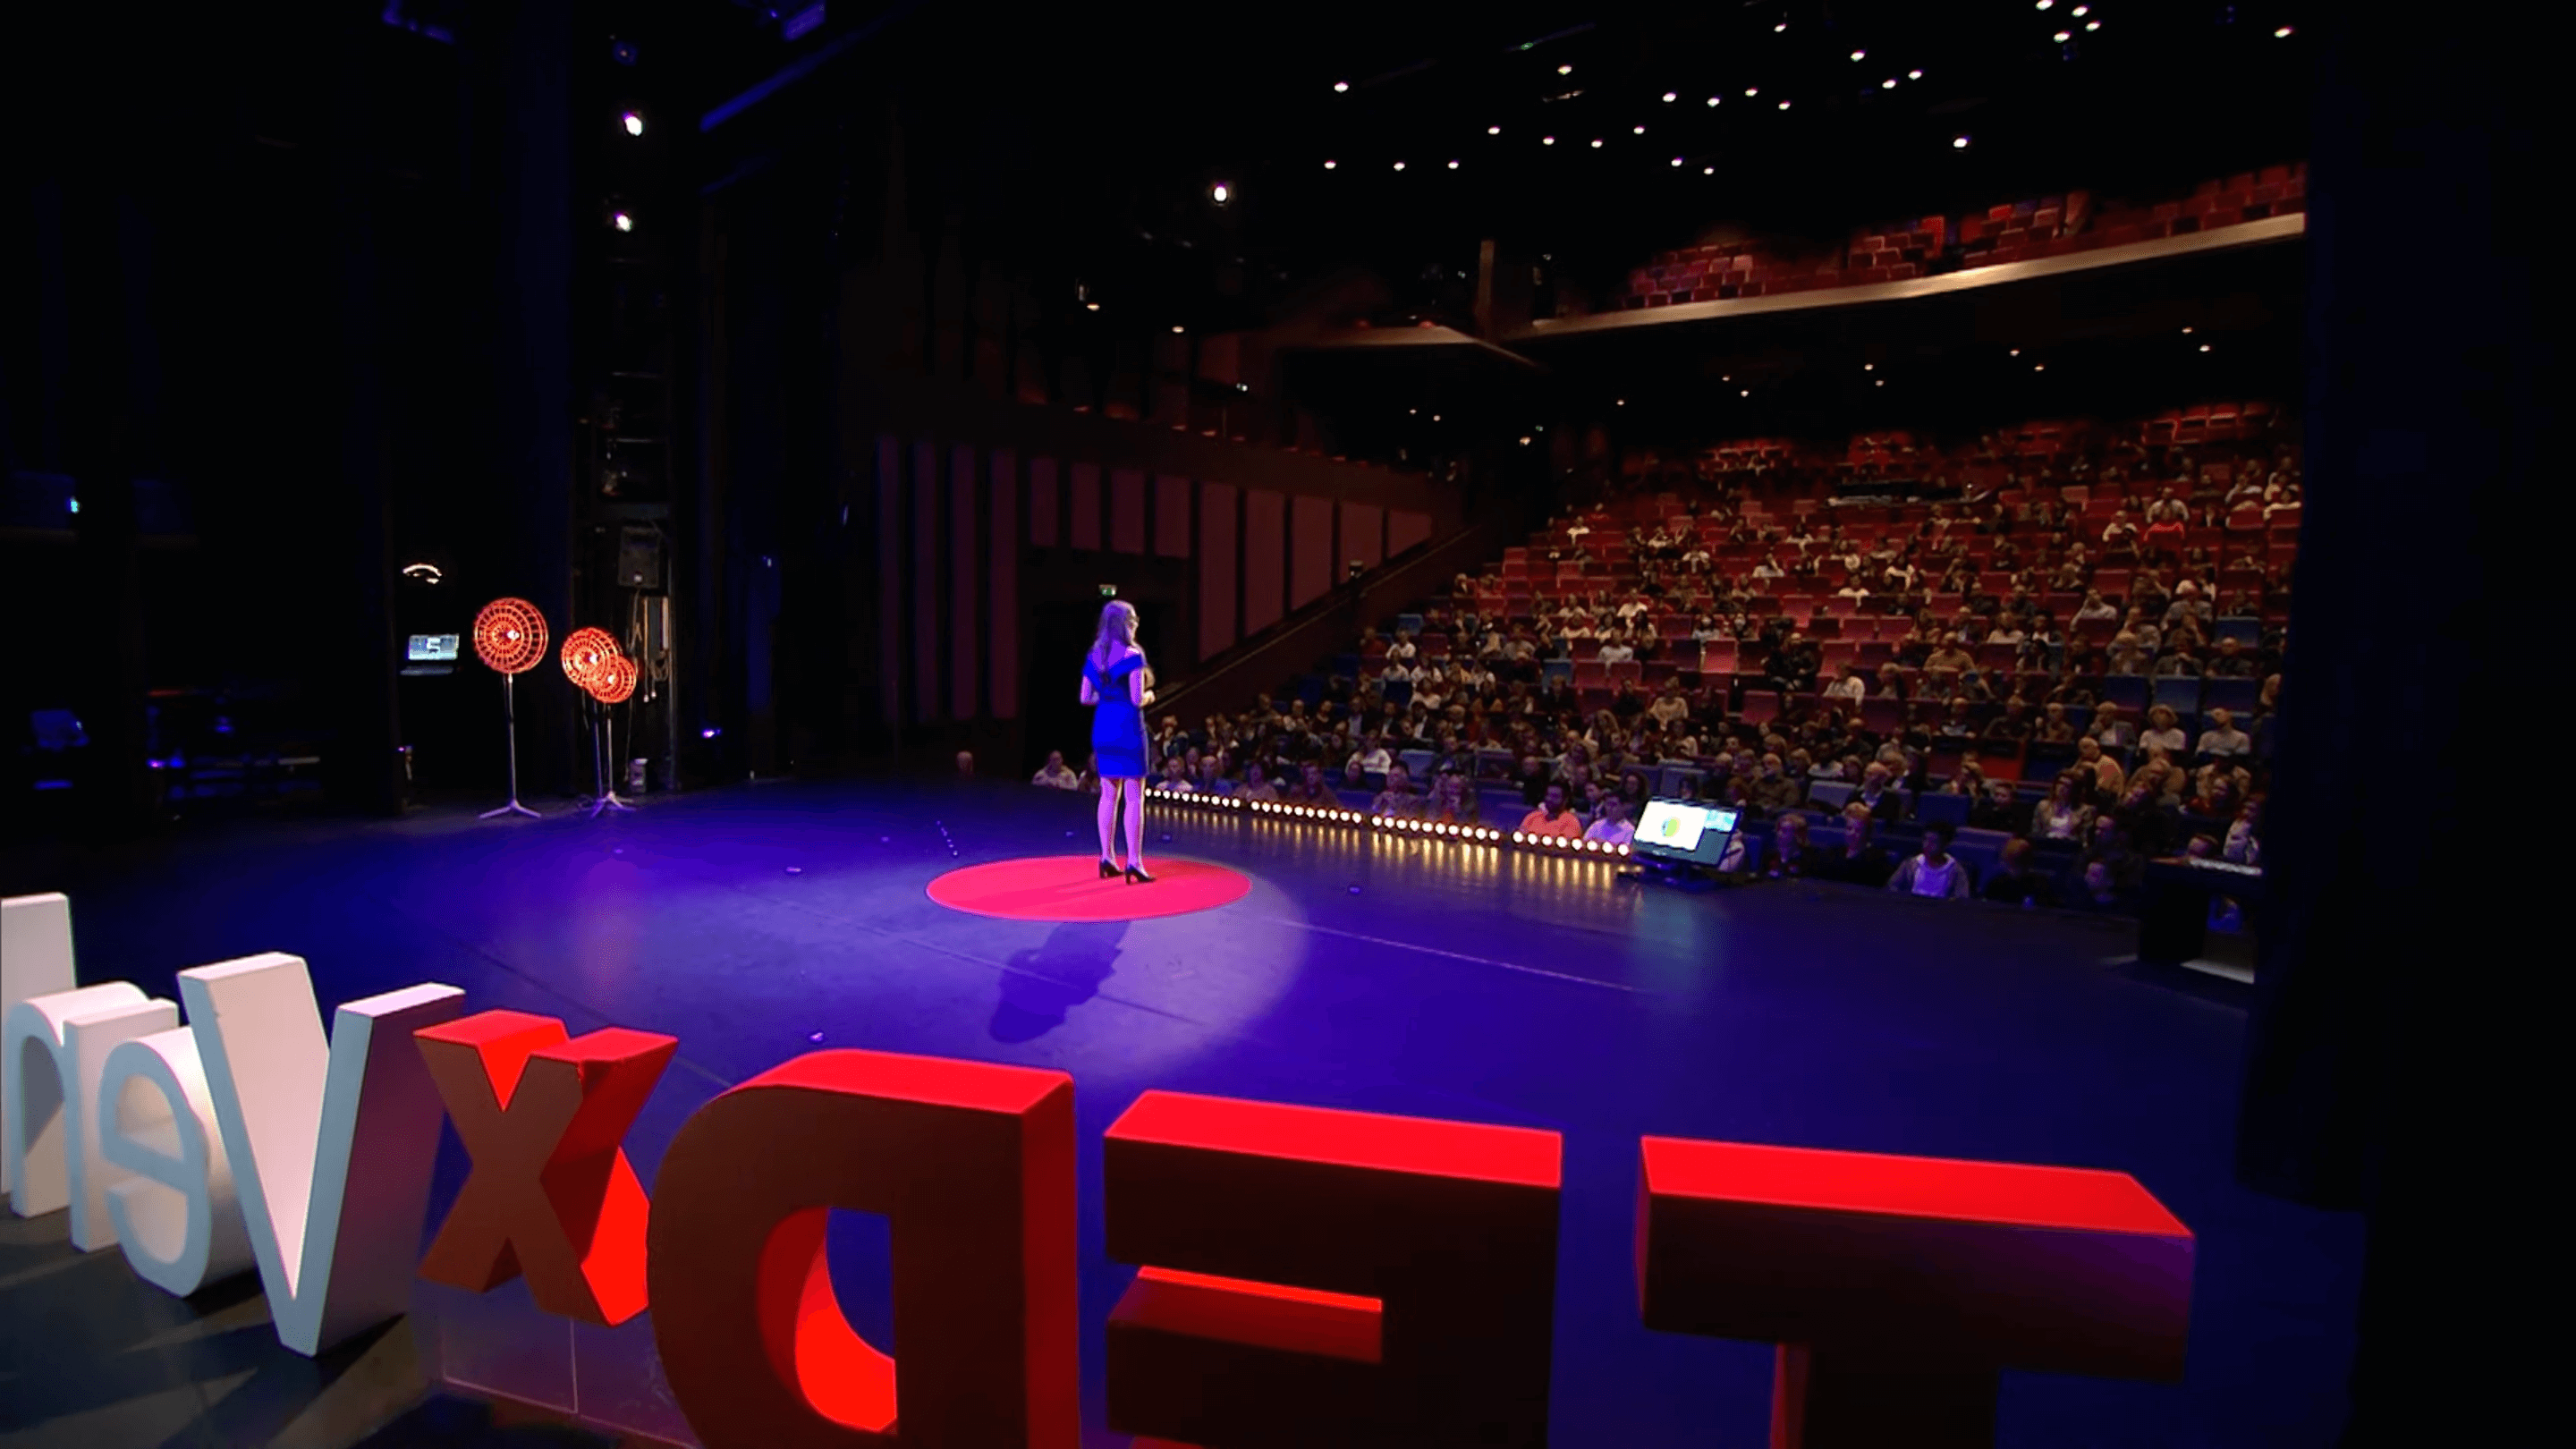 Tedx Talk by Daphne Muller